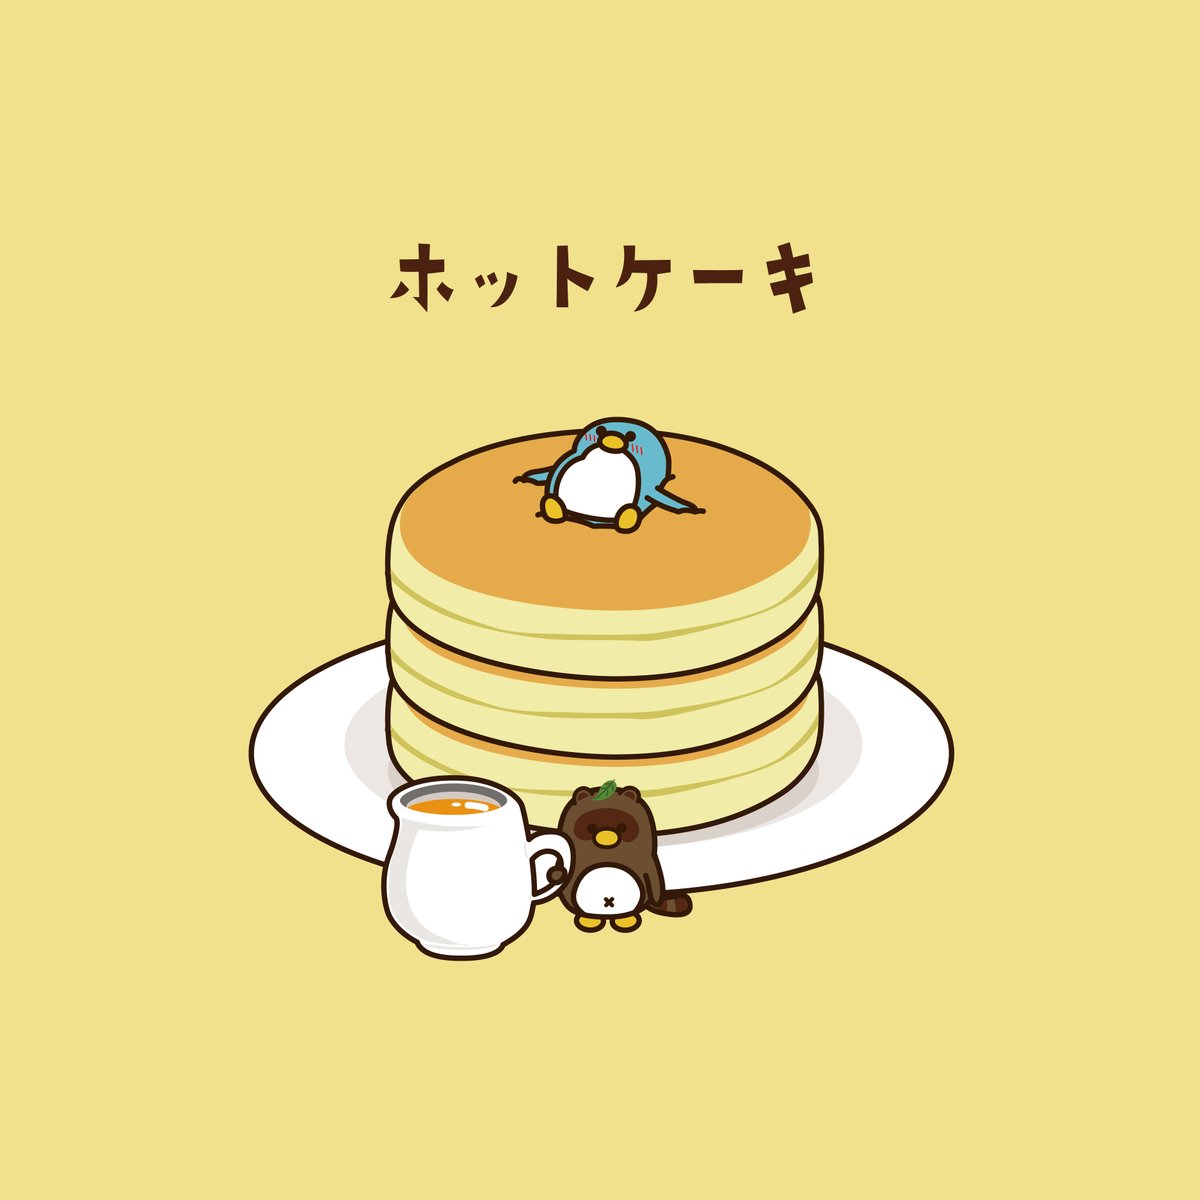 no humans pancake bird penguin food yellow background butter  illustration images